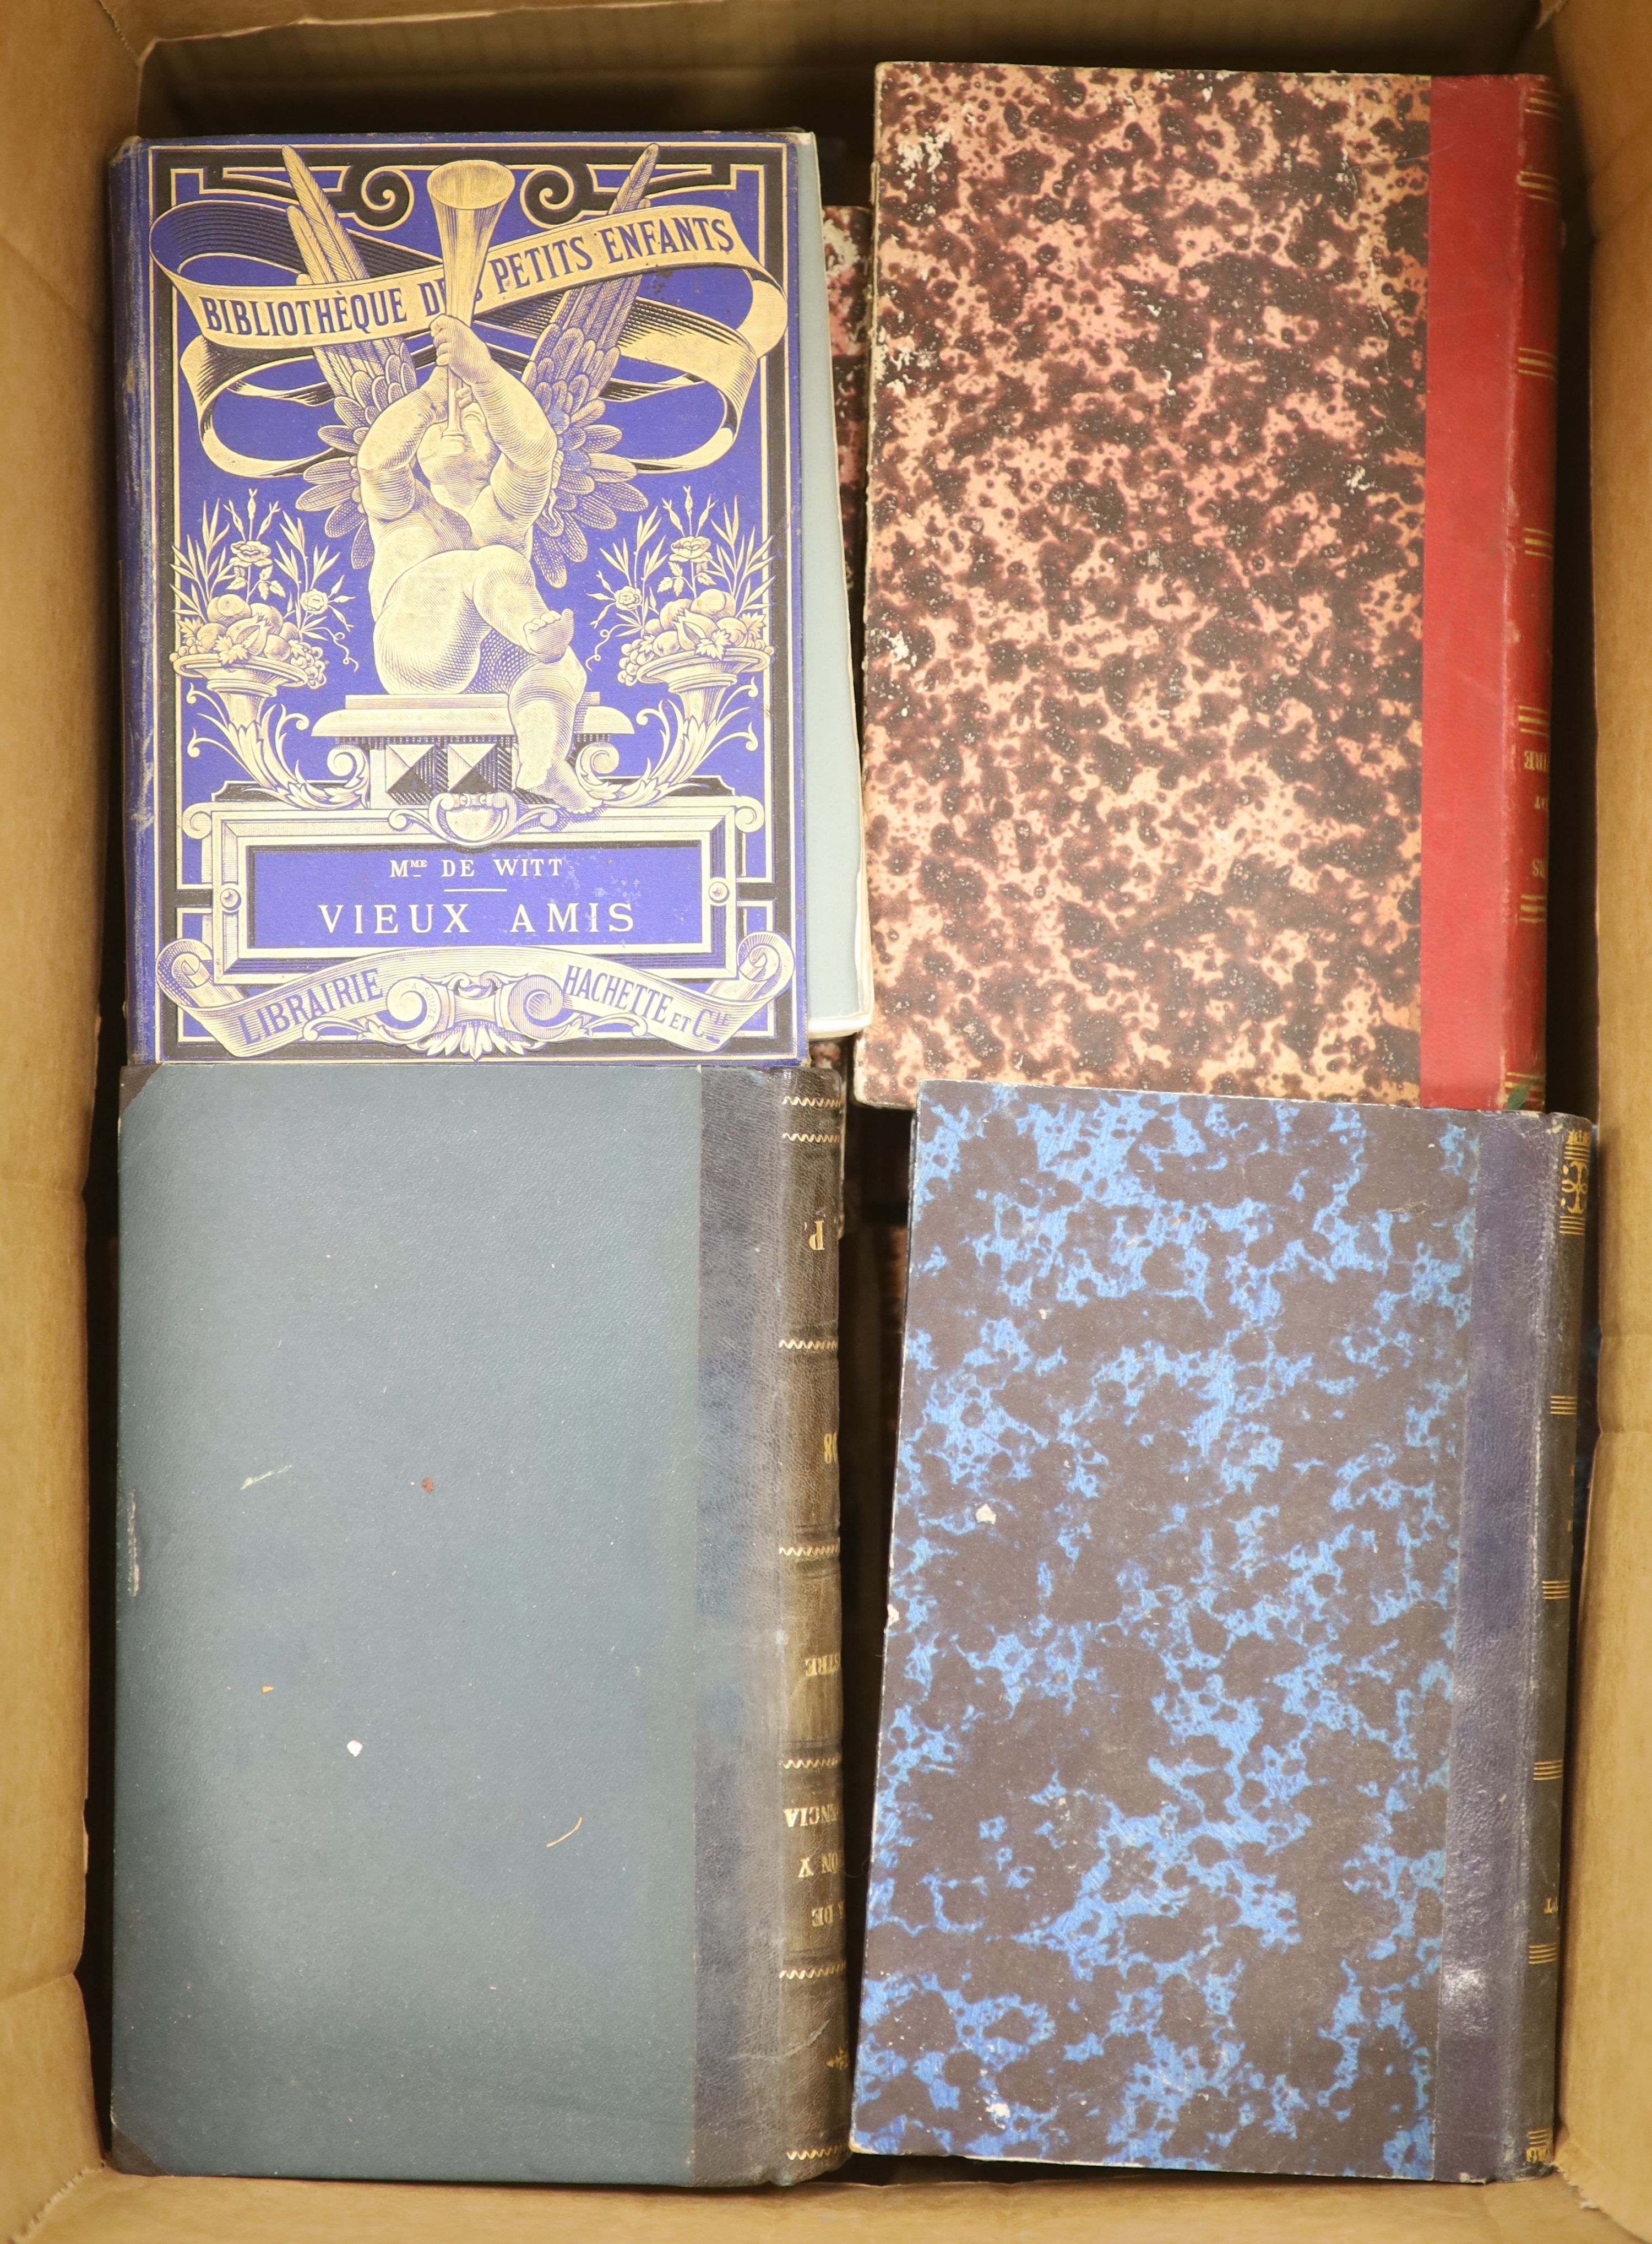 Flecker, James Elroy - The Old Ships, qto, paper wraps, The Poetry Bookshop, London 1915, Hodgson, William Noel